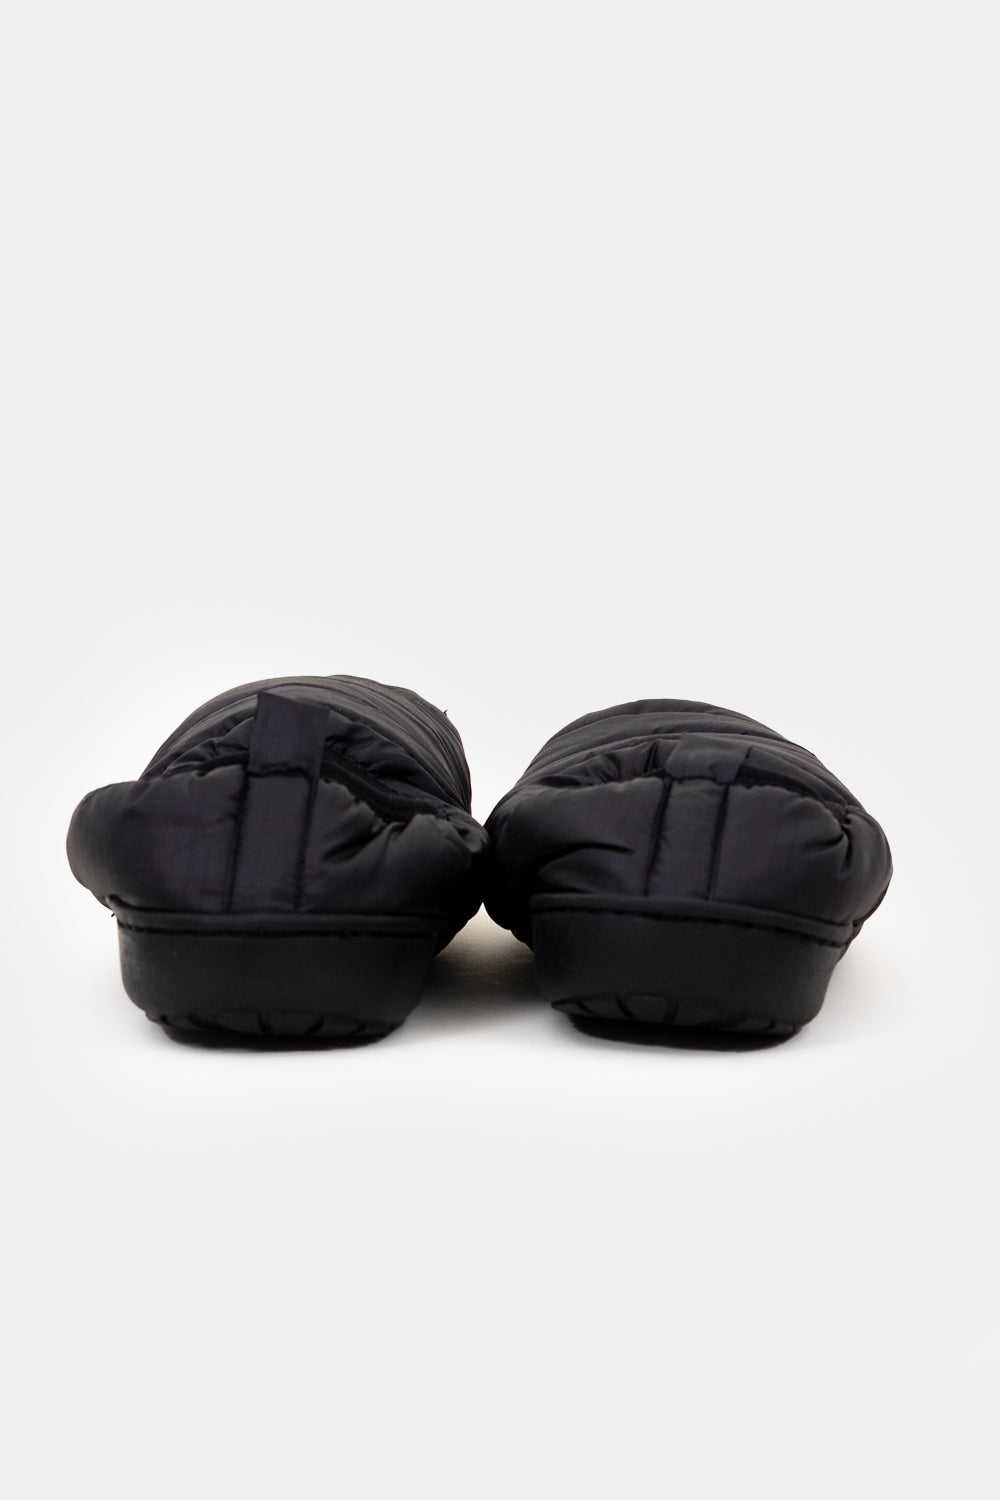 SUBU Indoor Outdoor Packable Slippers (Gloss Black)